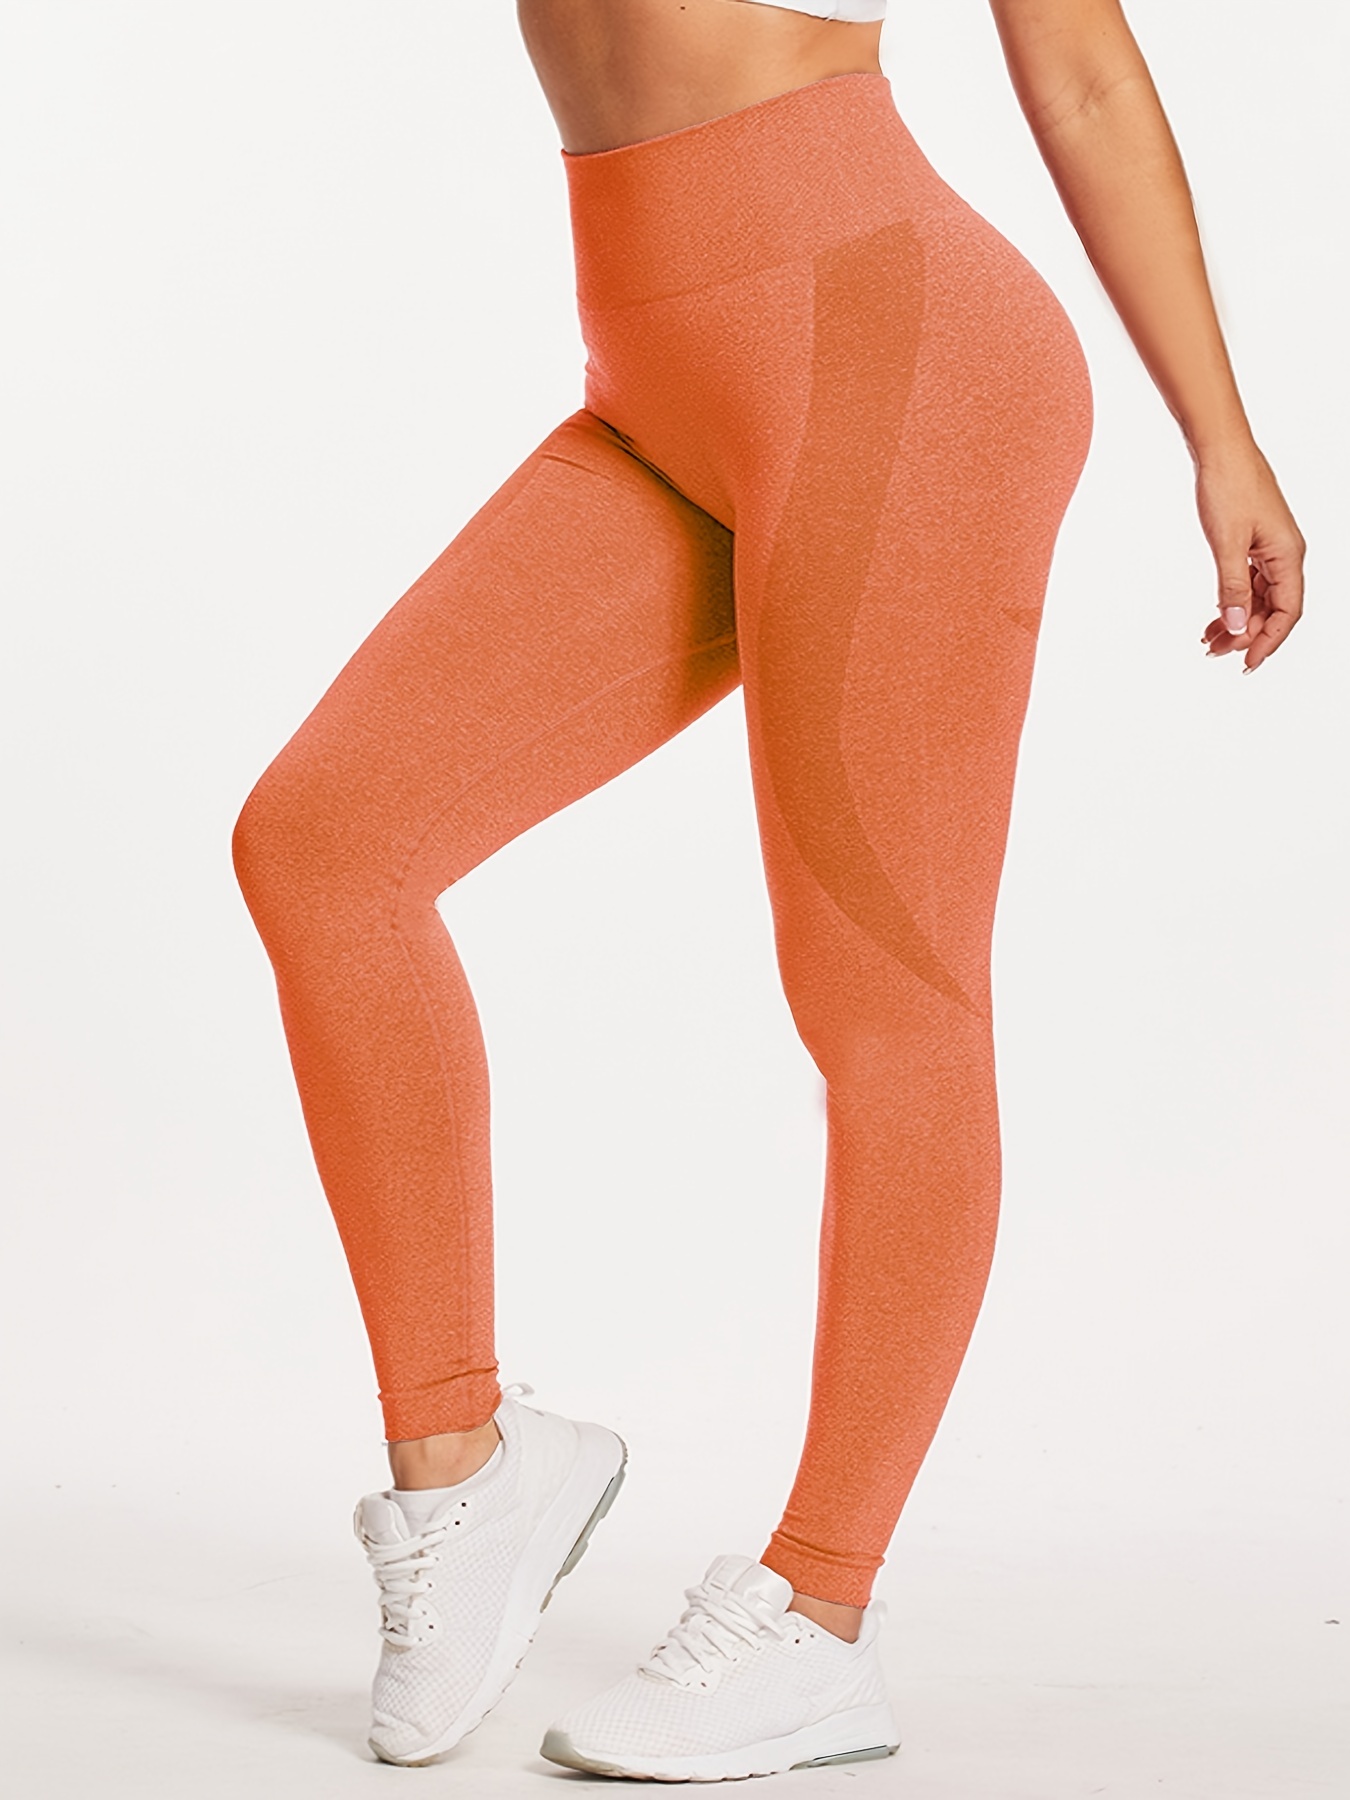 Solid Color Yoga Leggings, Seamless High Waist Fitness Workout Yoga Pants,  Women's Activewear